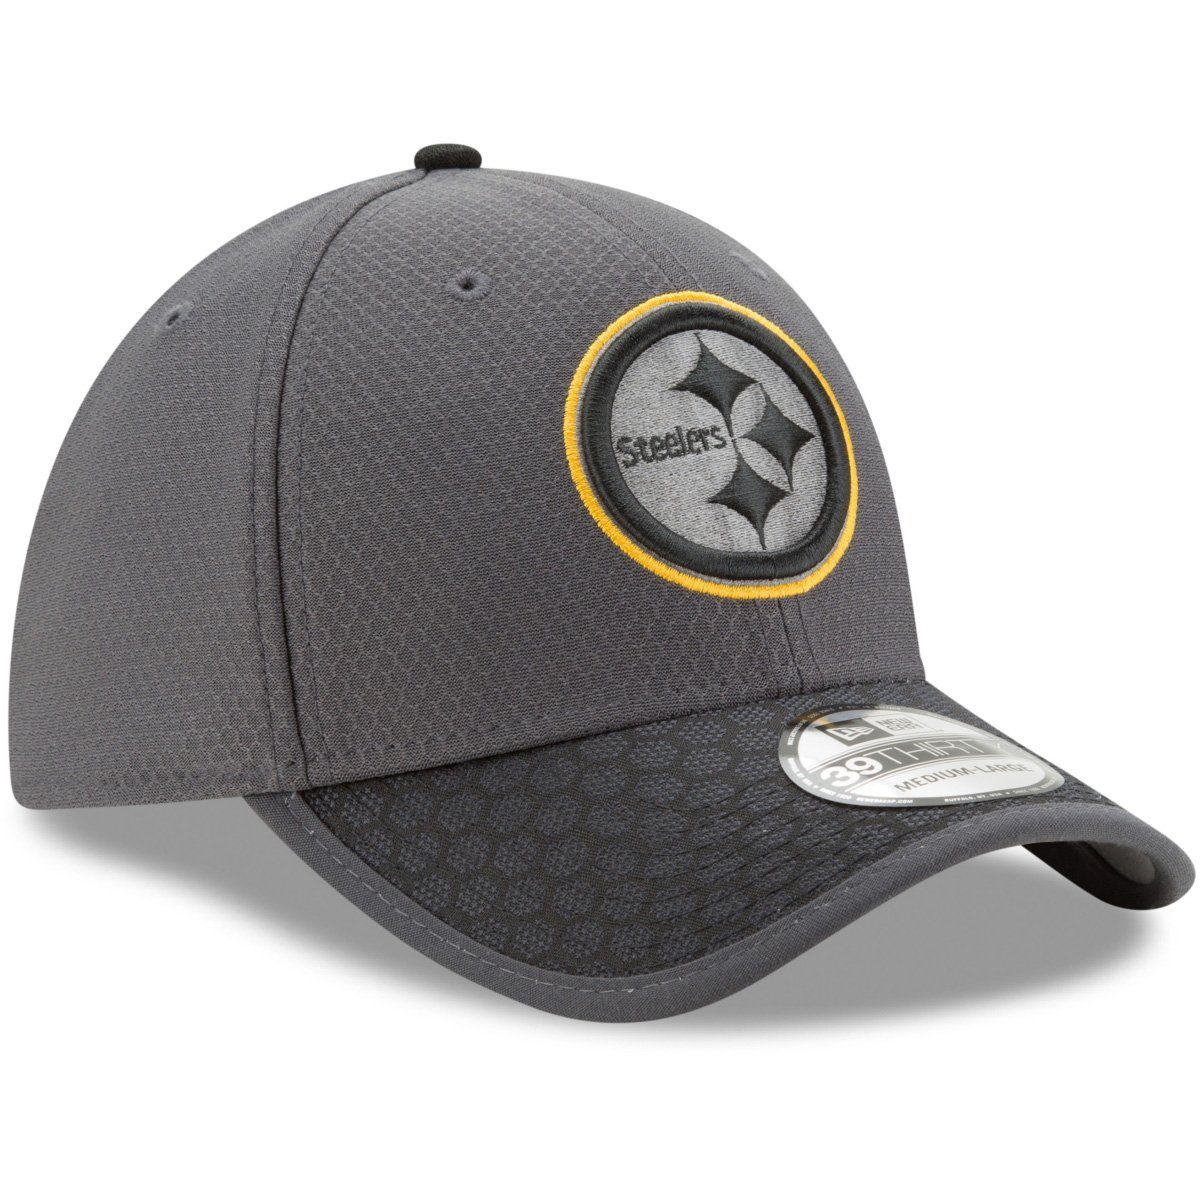 New Era Flex Cap 39Thirty SIDELINE Pittsburgh NFL Steelers